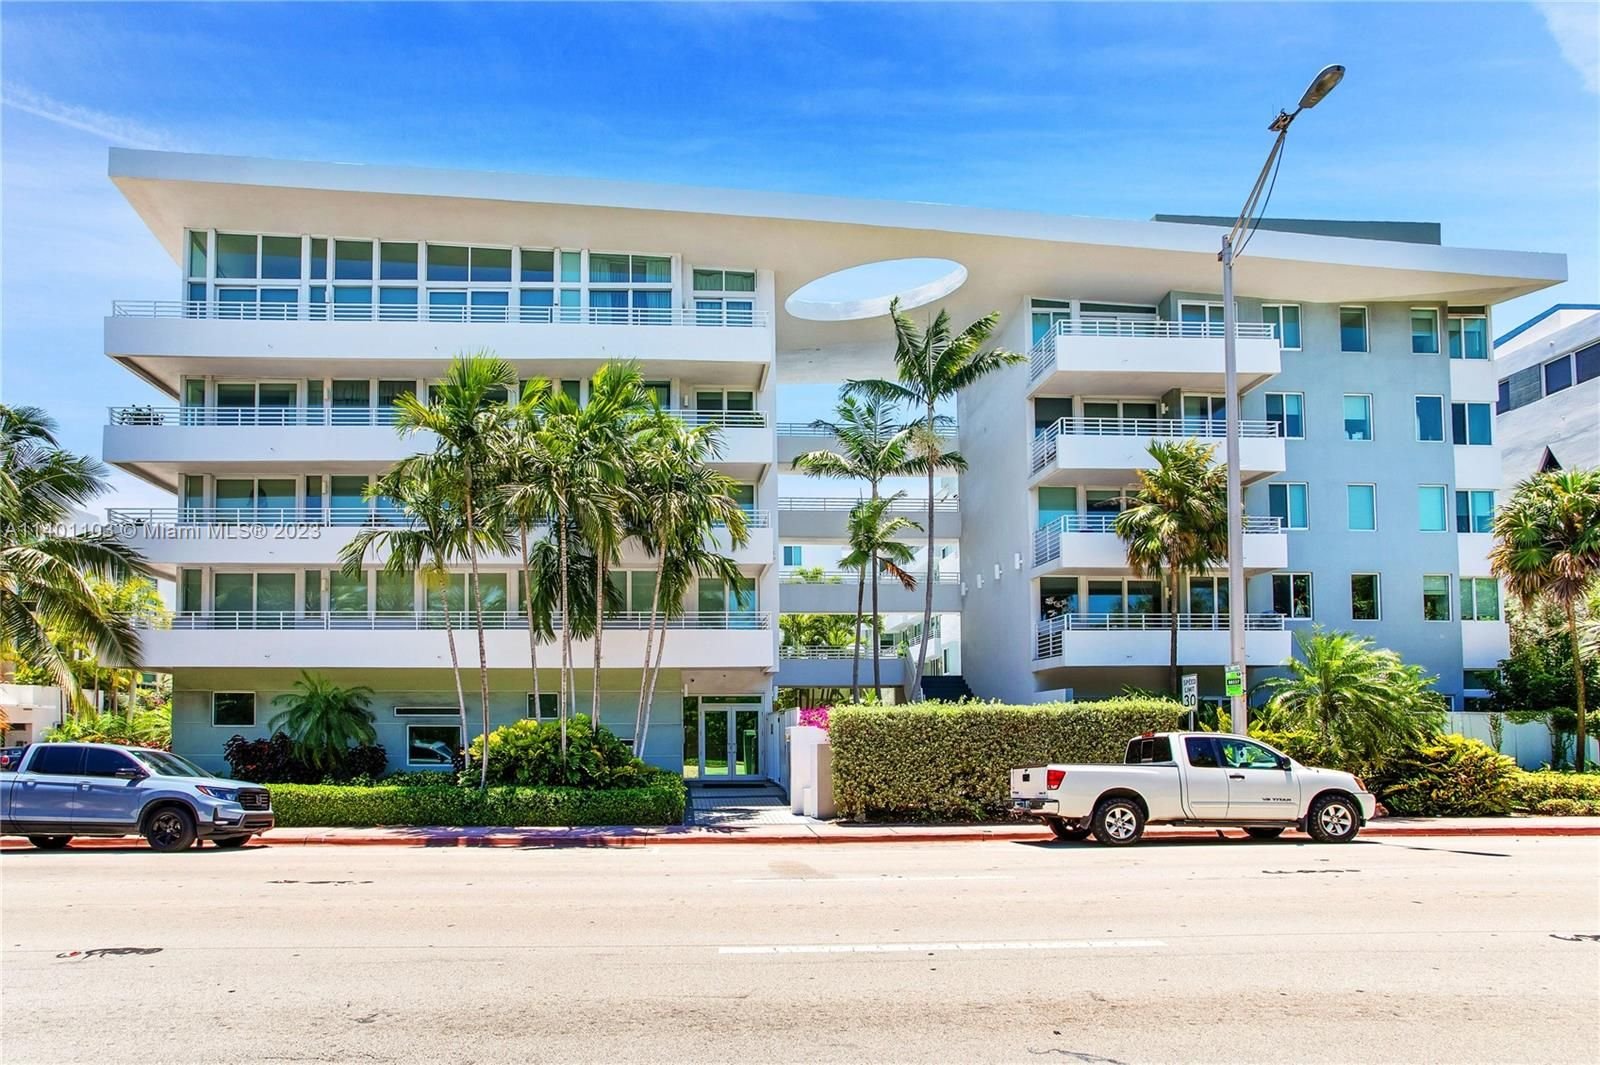 Real estate property located at 7800 Collins Ave #204, Miami-Dade County, Miami Beach, FL